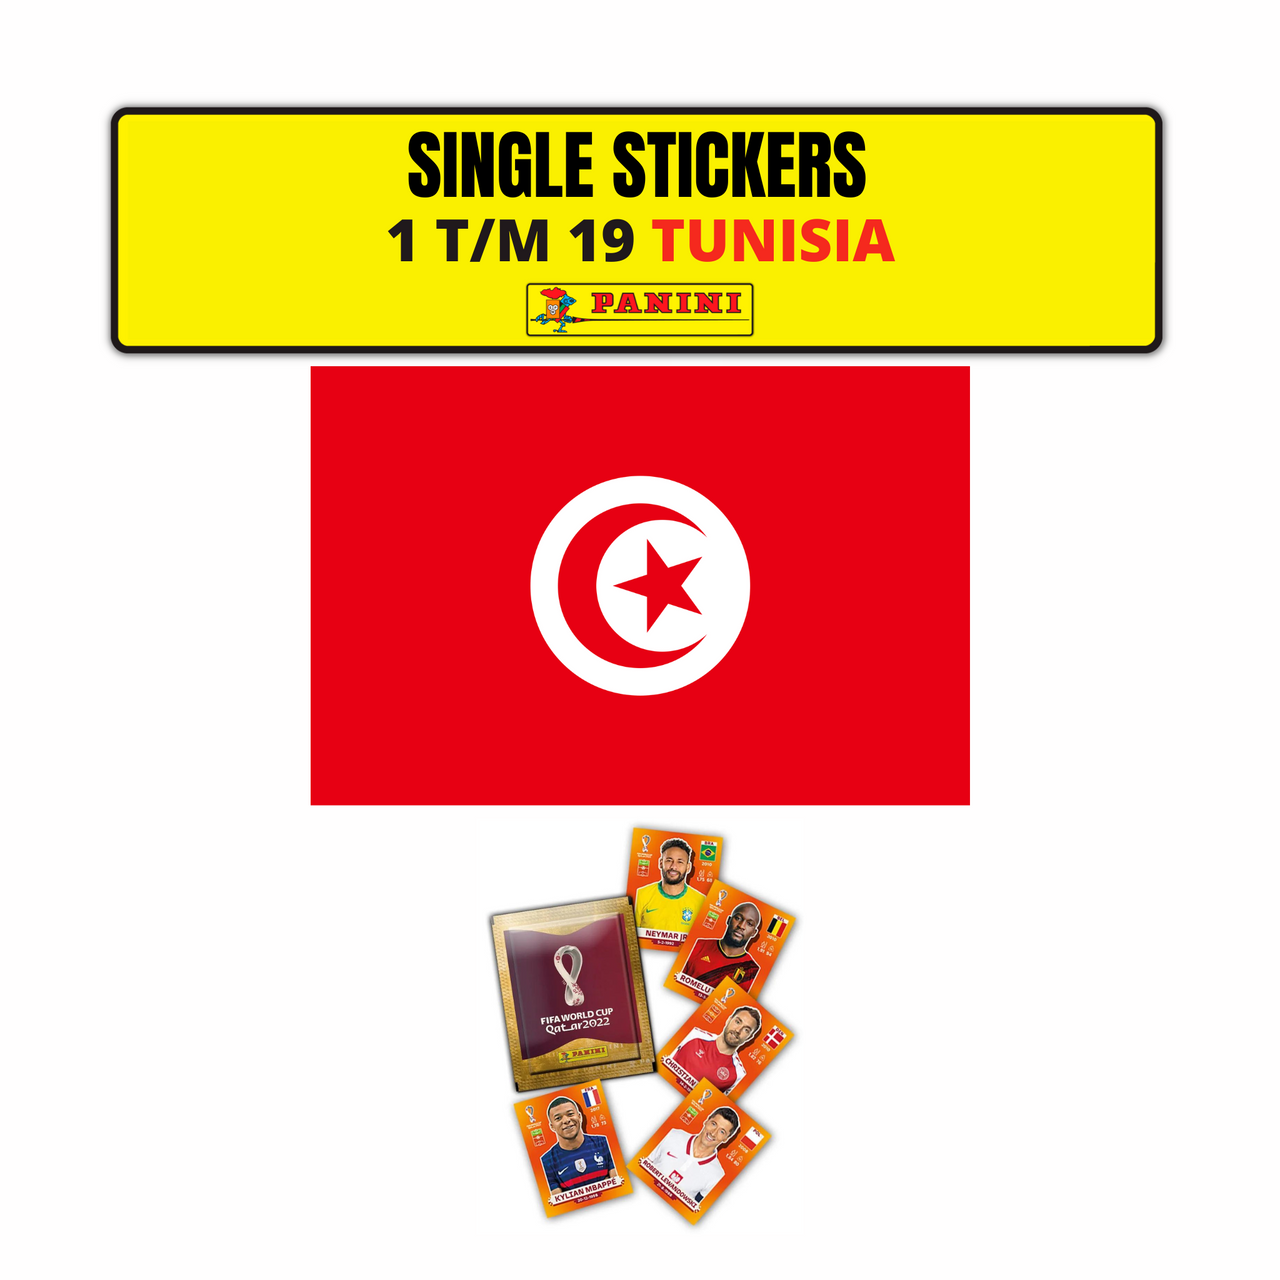 TEAM TUNISIA SINGLE STICKERS - PANINI FIFIA QATAR 2022